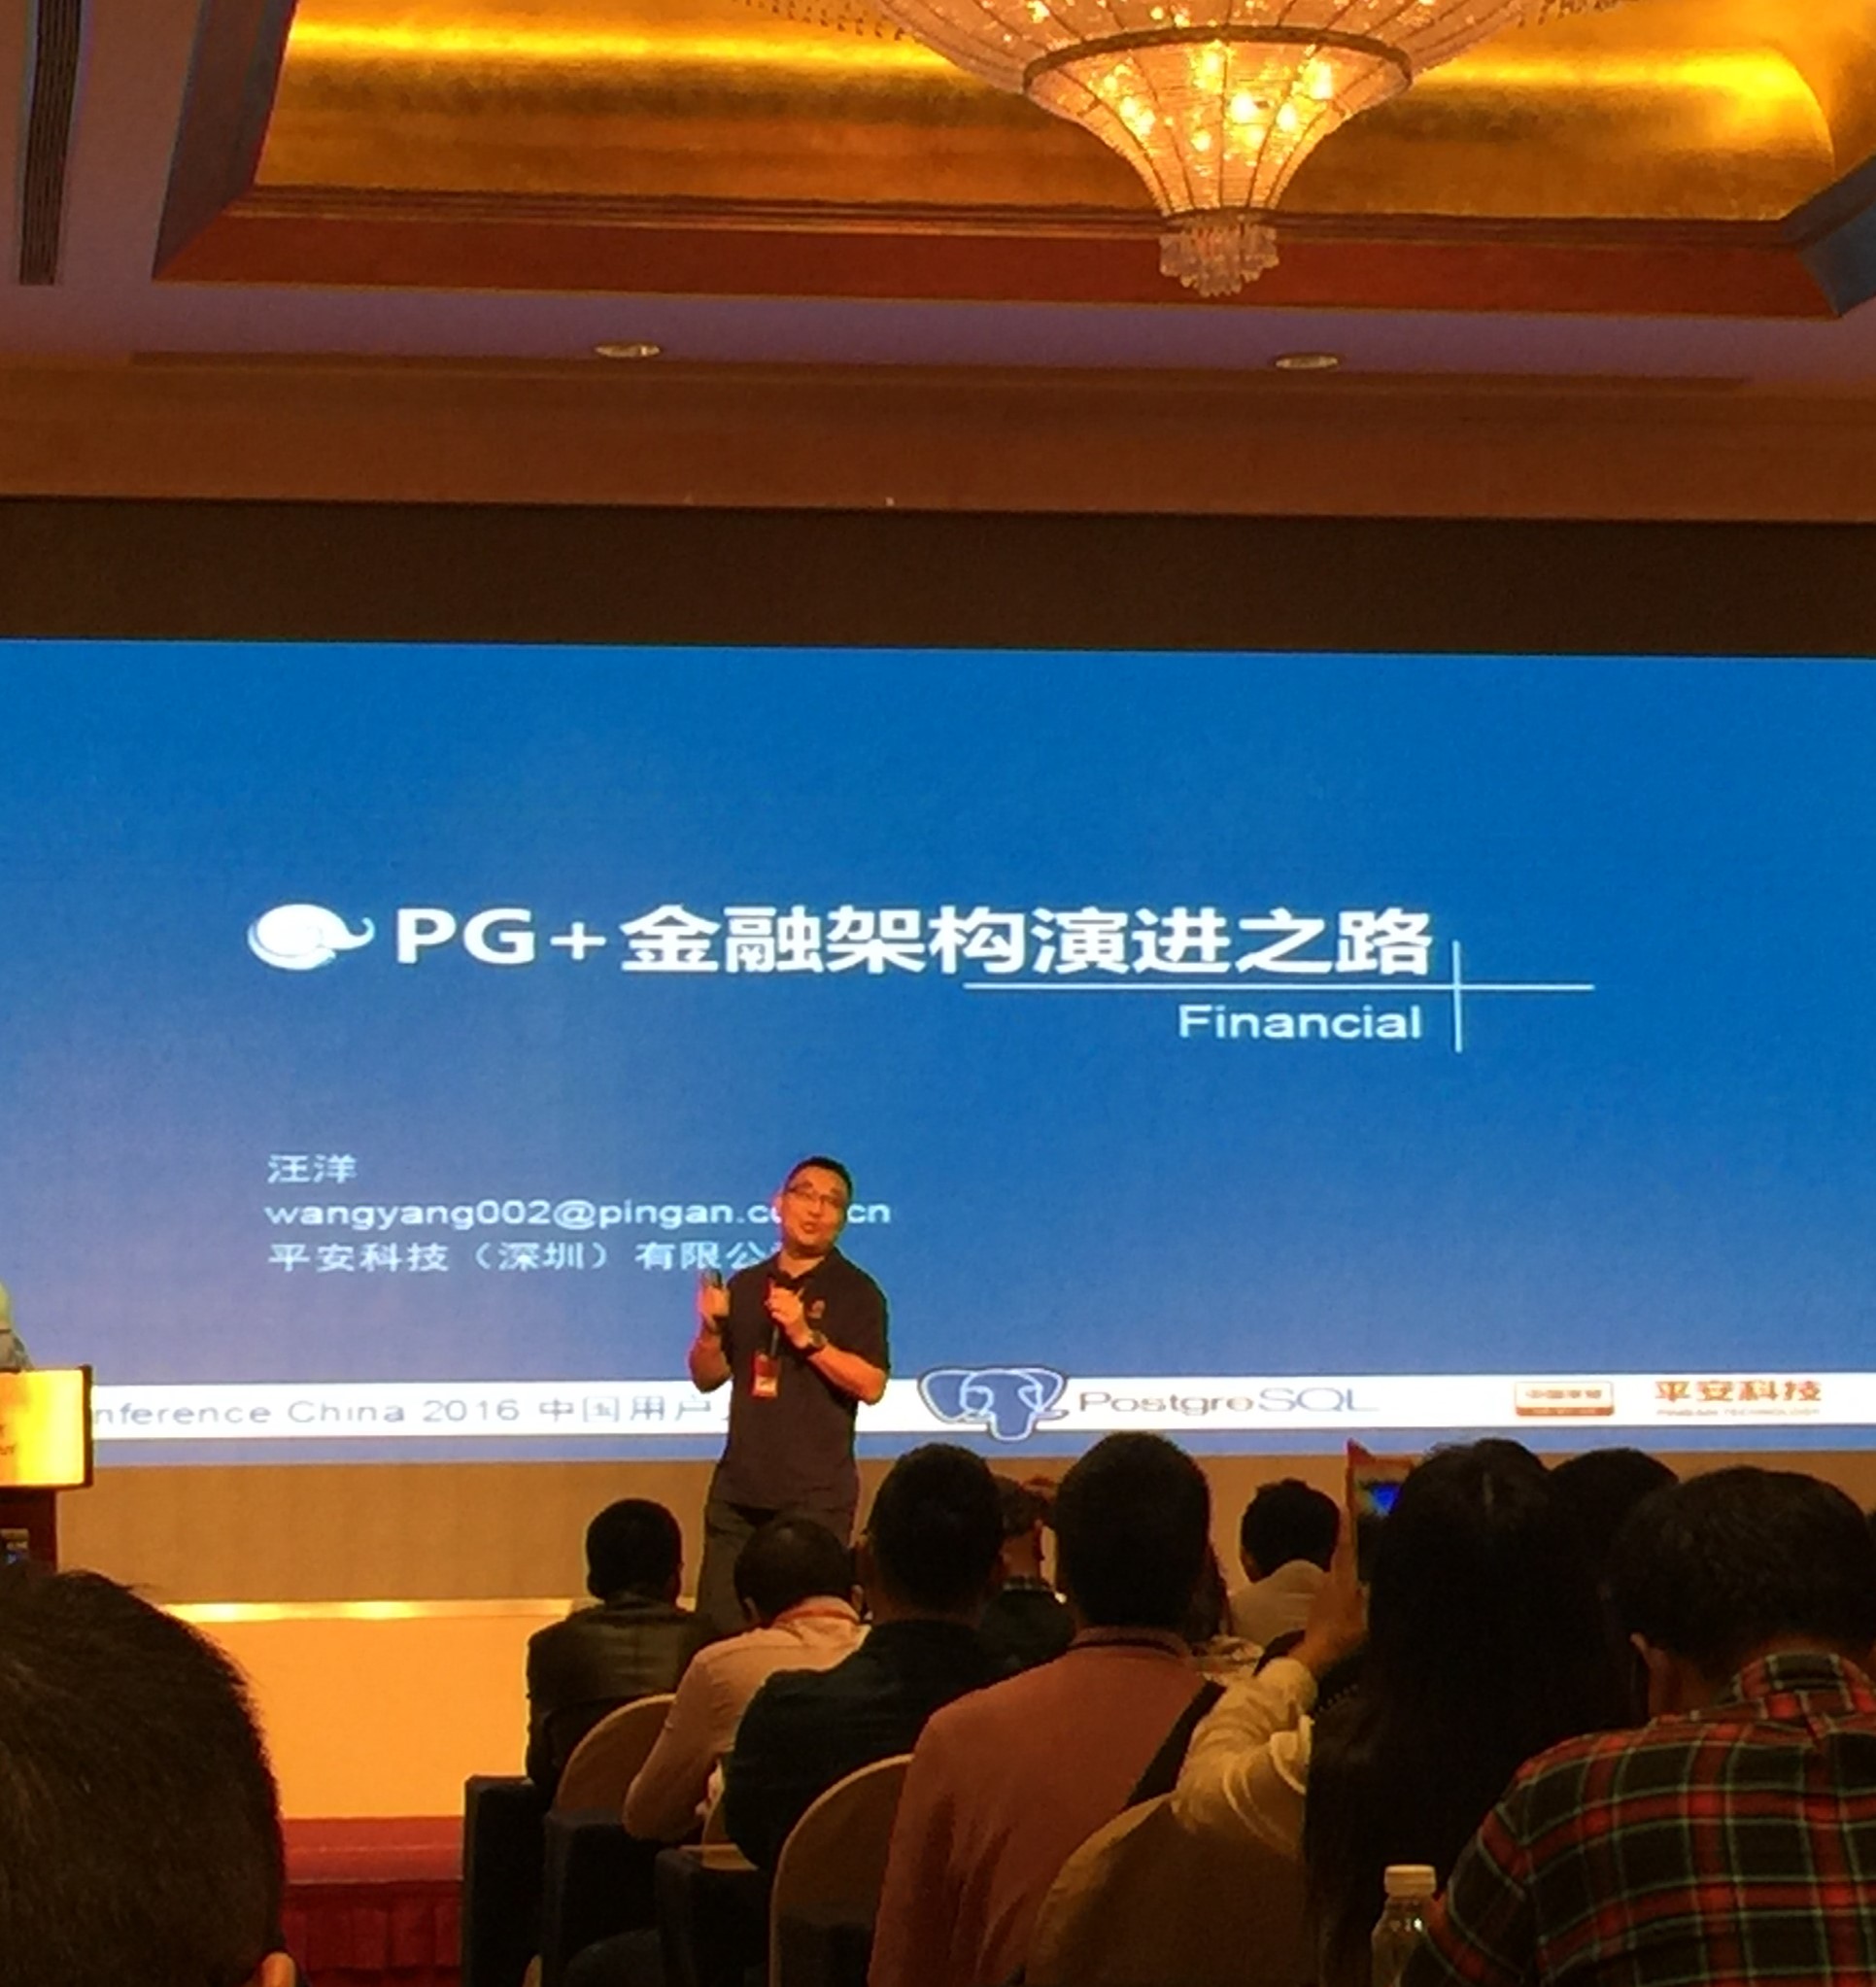 Wang Yang 氏による基調講演: 金融分野における PostgreSQL の活用